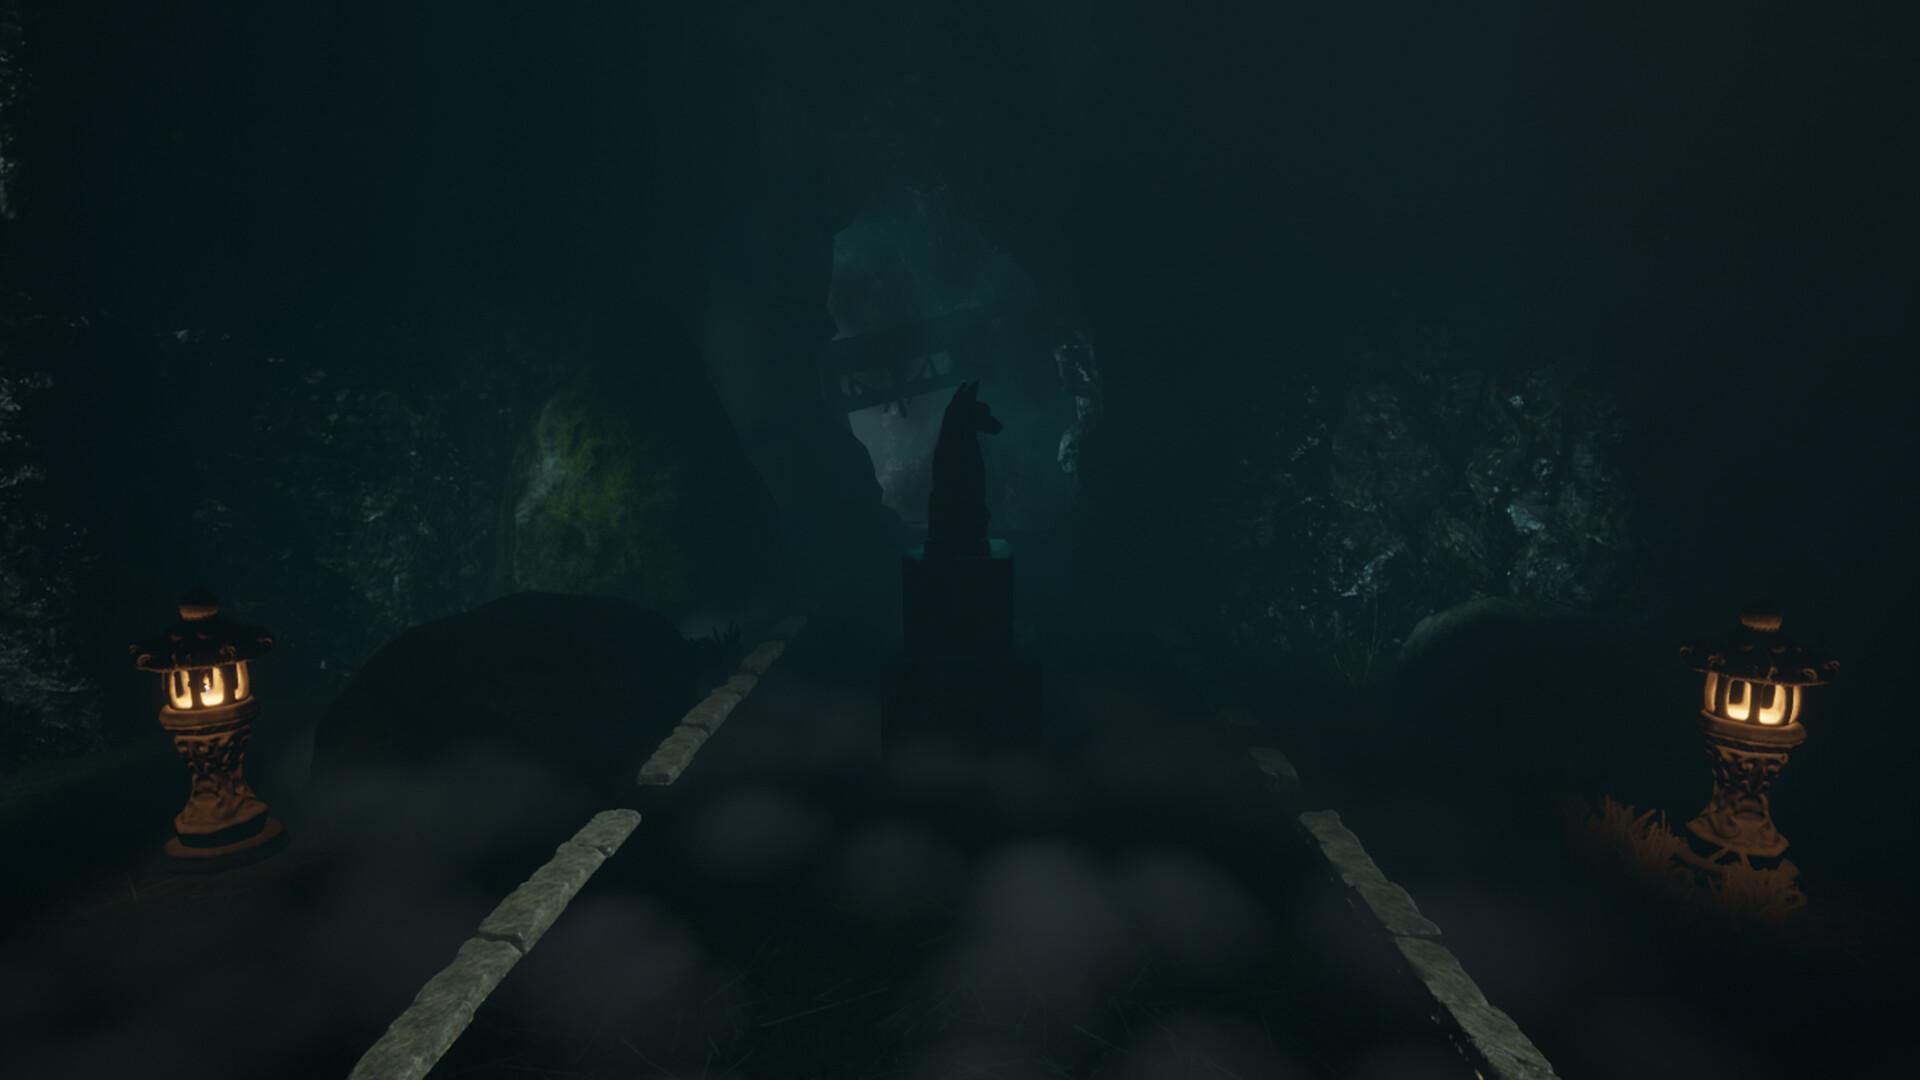 Screenshot №16 from game Malice